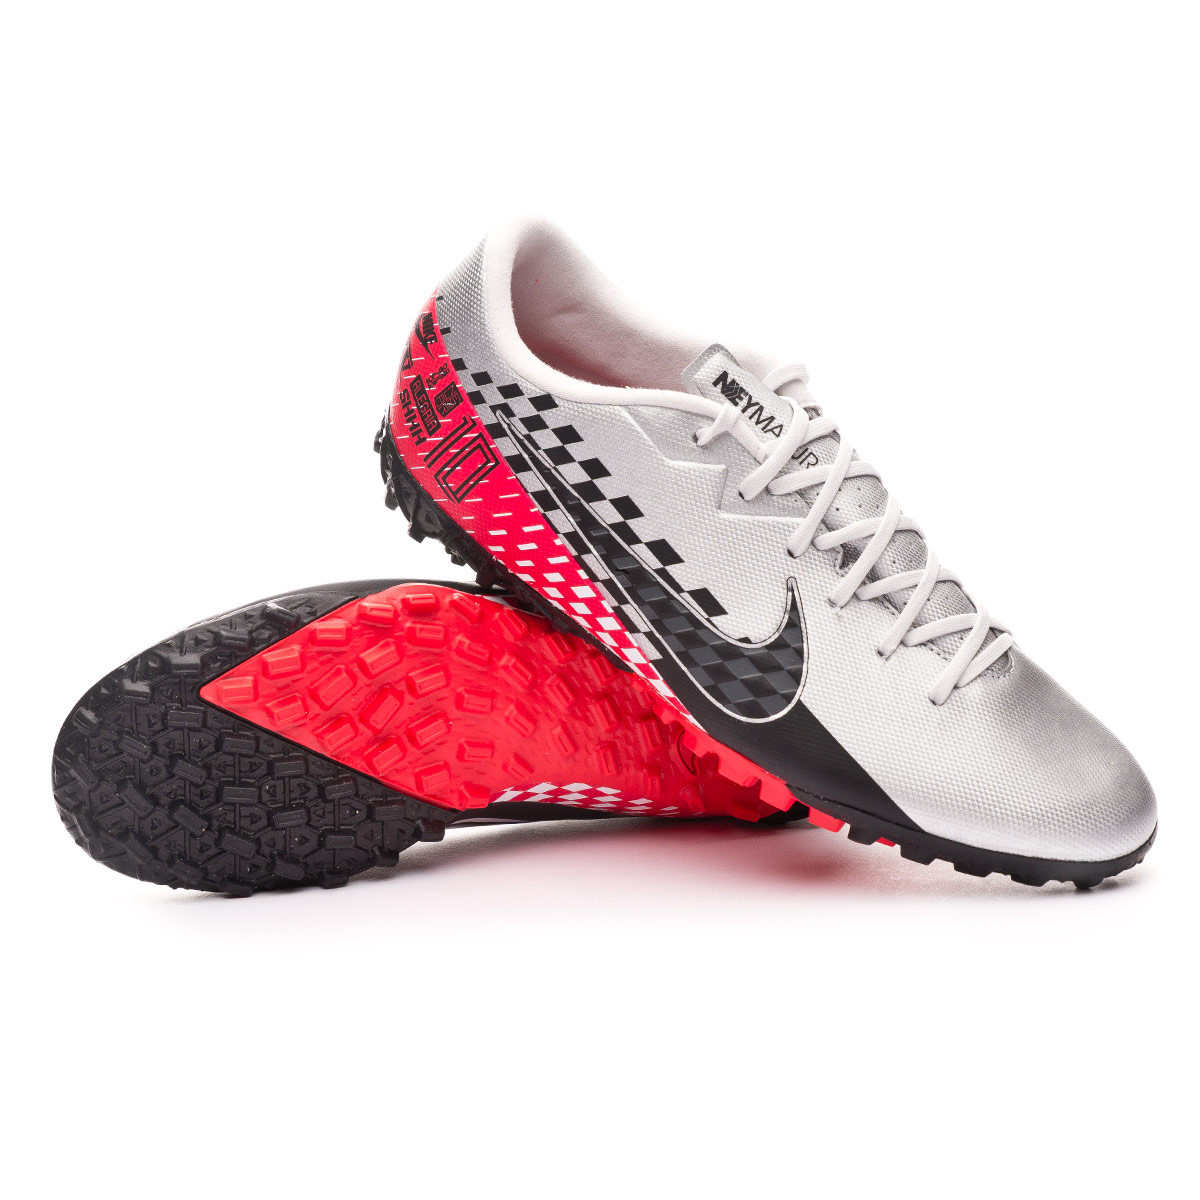 Zapatos de fútbol Nike Mercurial Vapor XIII Academy Turf Neymar Jr  Chrome-Black-Red orbit-Platinum tint - Tienda de fútbol Fútbol Emotion